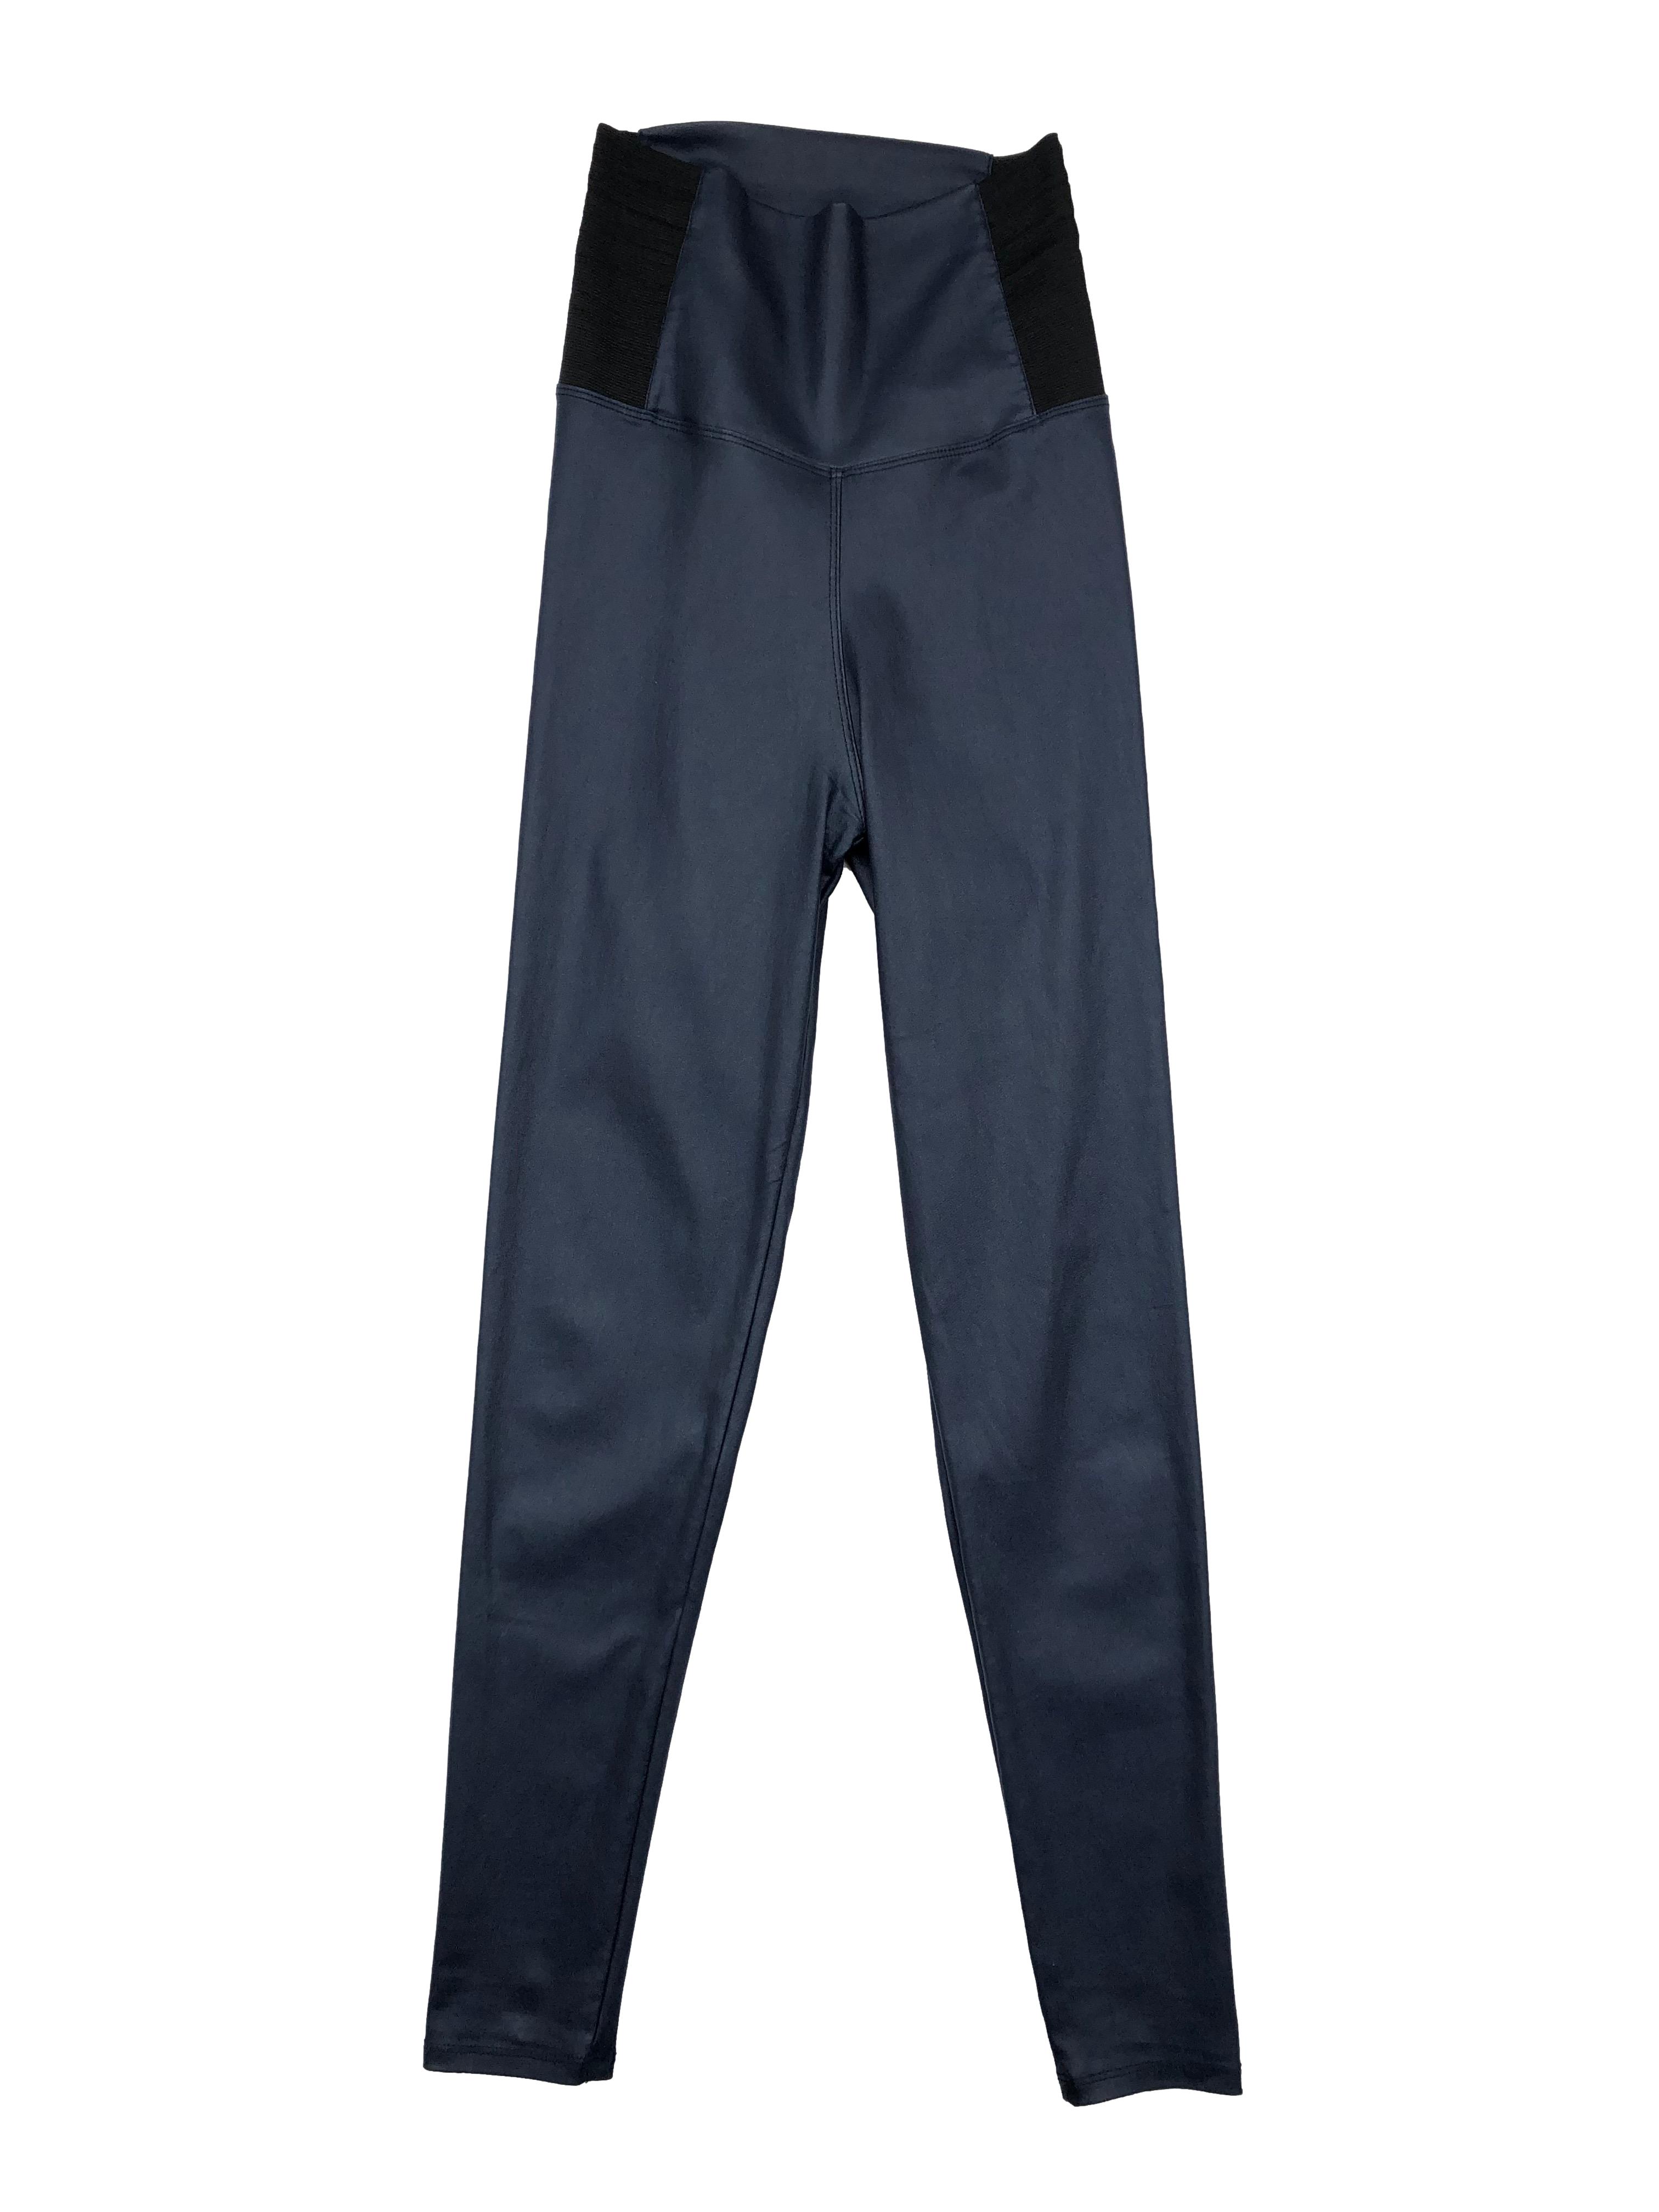 Pantalón pitillo azul, tela satinada ligeramente stretch, pretina alta con elásticos laterales. Cintura 60cm sin estirar, Largo 105cm.